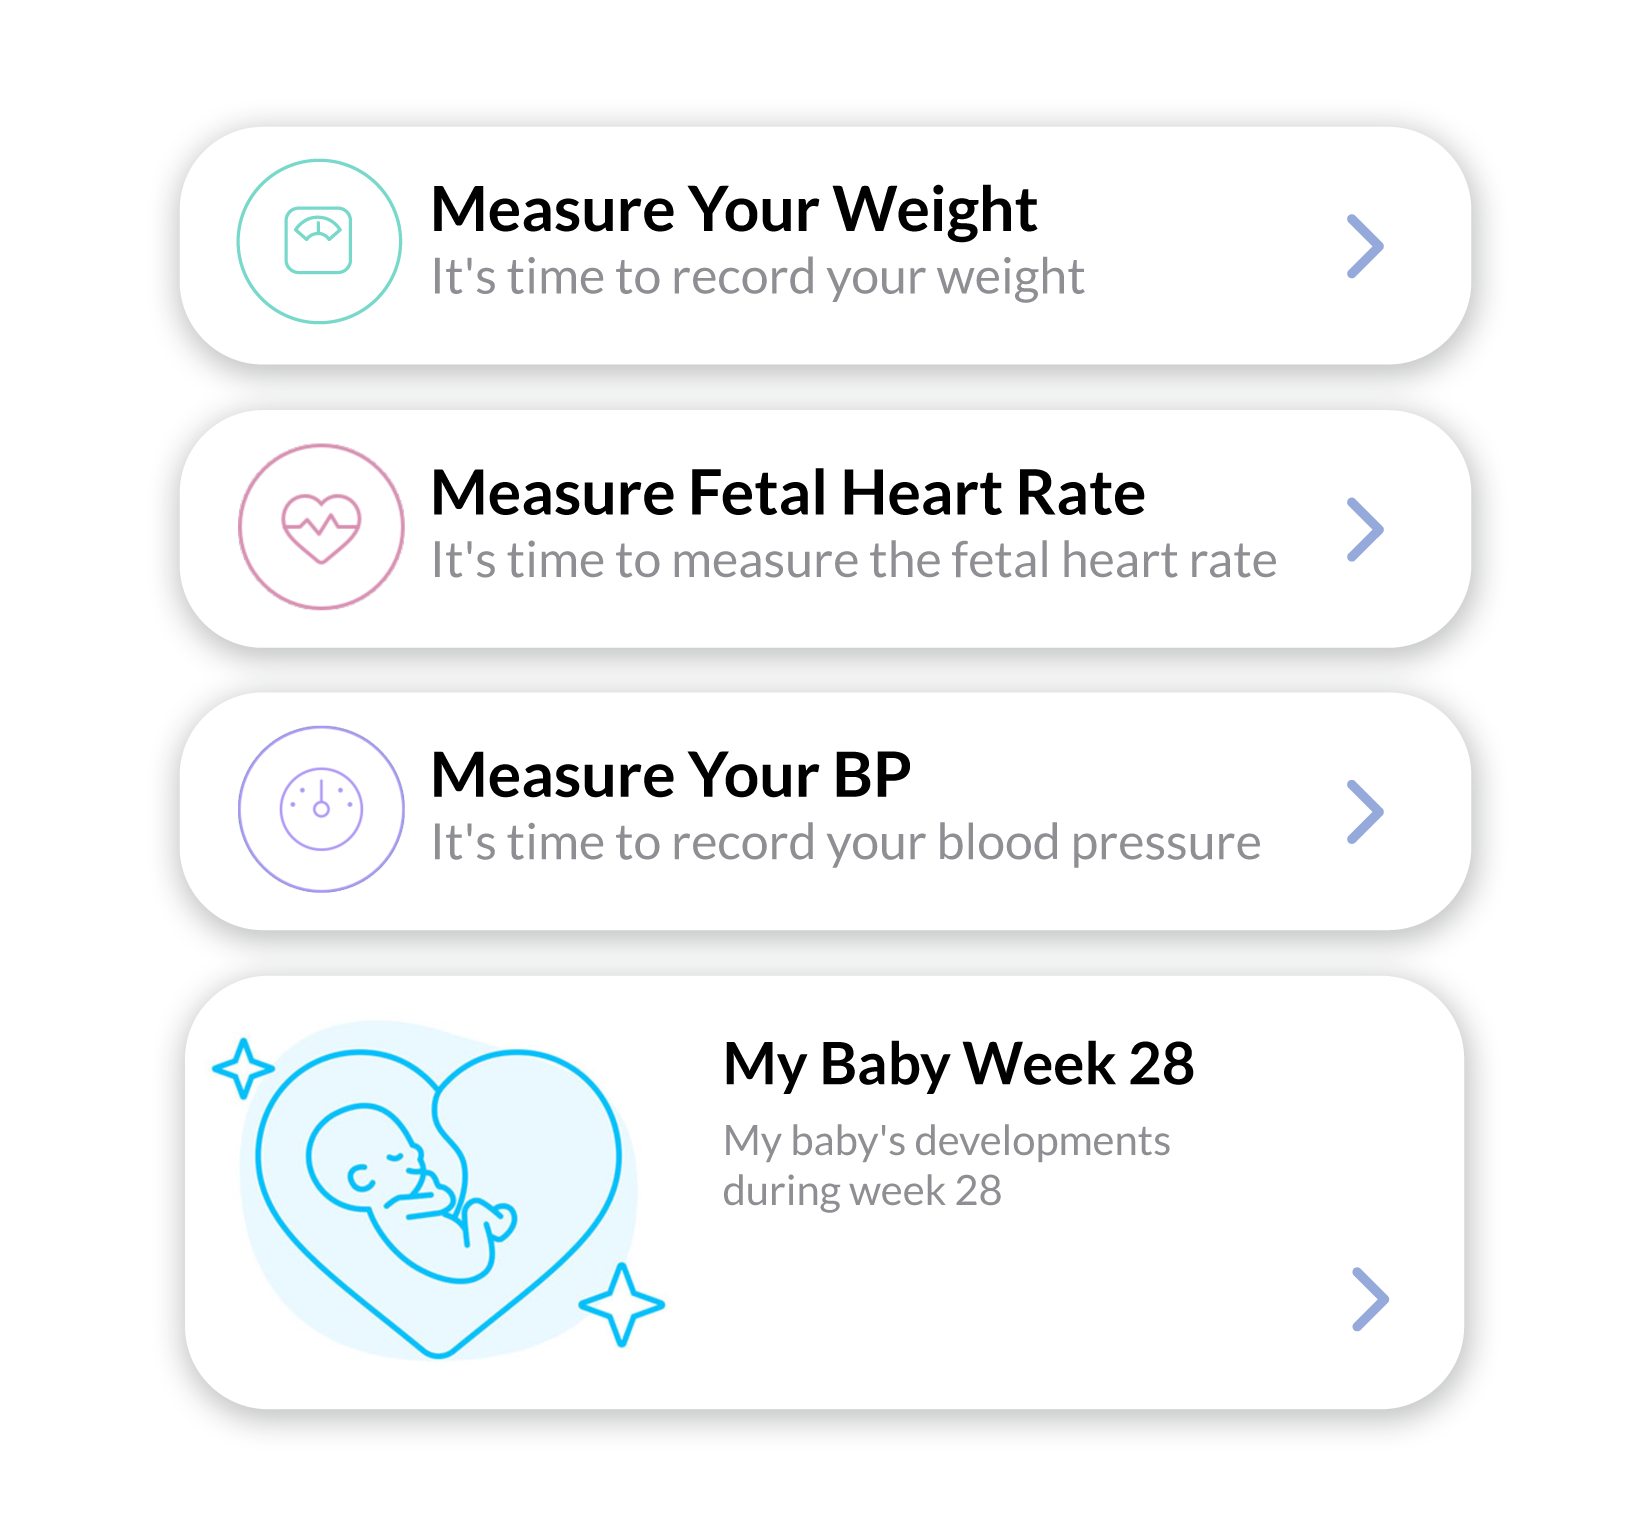 HeraBEAT Fetal Heart Rate Monitor